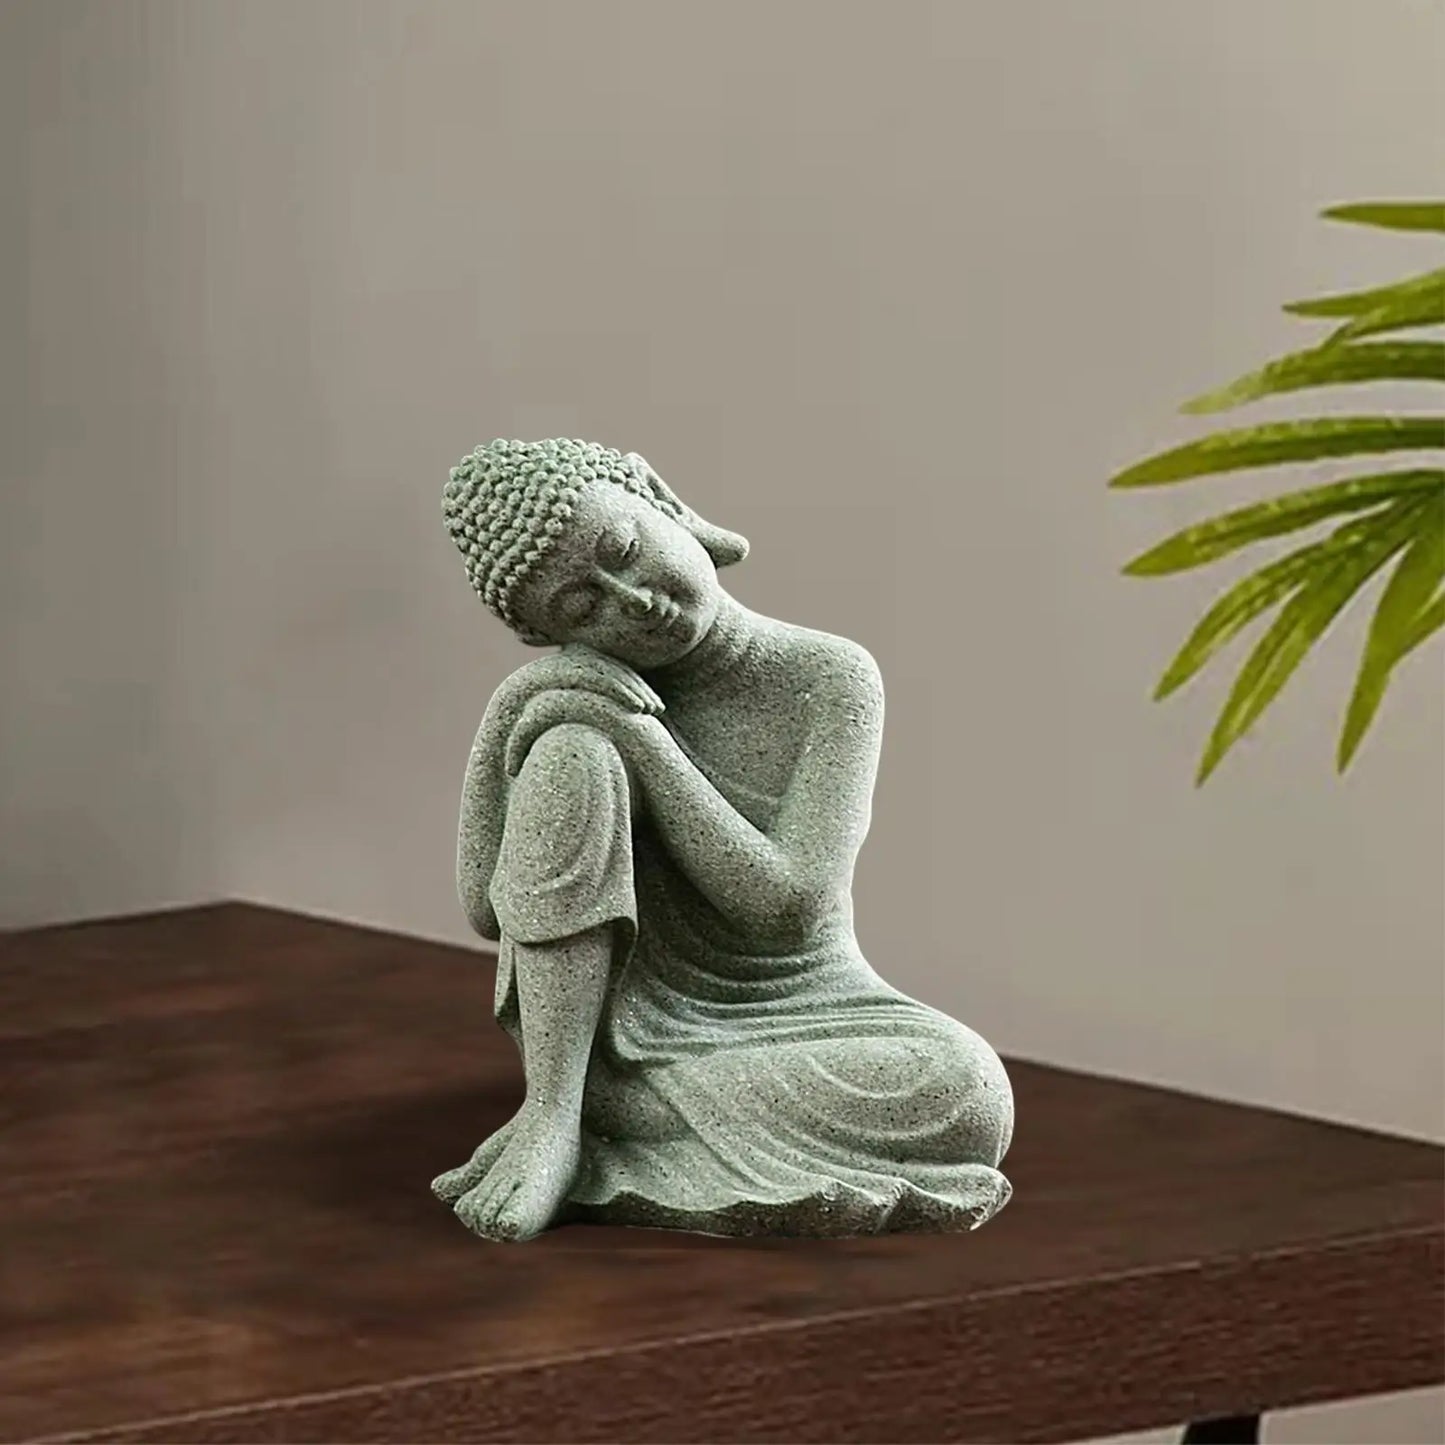 Small Buddha Statue Ornament Yoga Figurines rustic Oriental Decorative for Meditating Desktop Office Indoor Desk